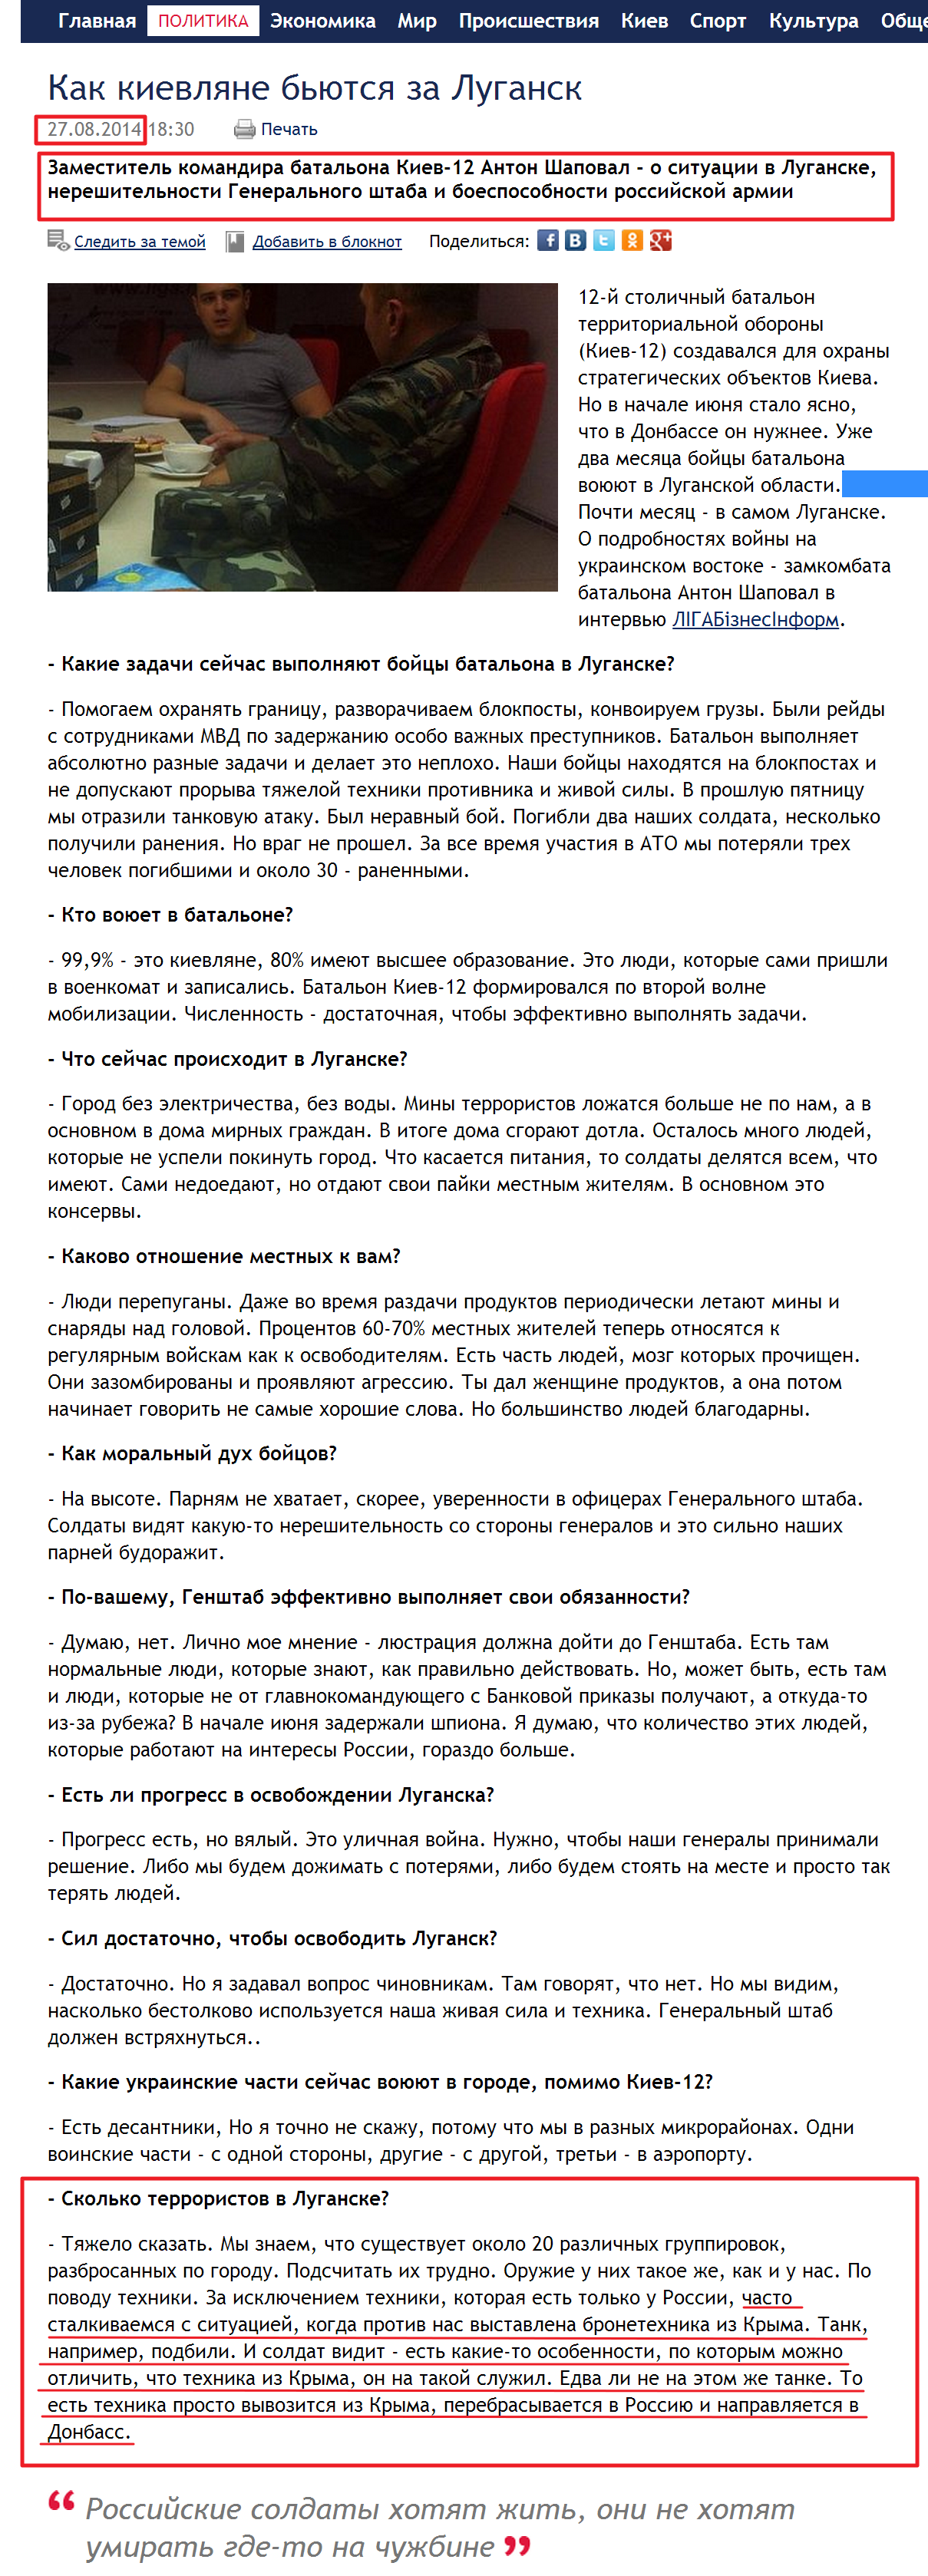 http://news.liga.net/interview/politics/3056731-kak_kievlyane_byutsya_za_lugansk.htm?utm_source=newsliganet&utm_medium=site&utm_term=top_block&utm_campaign=usability